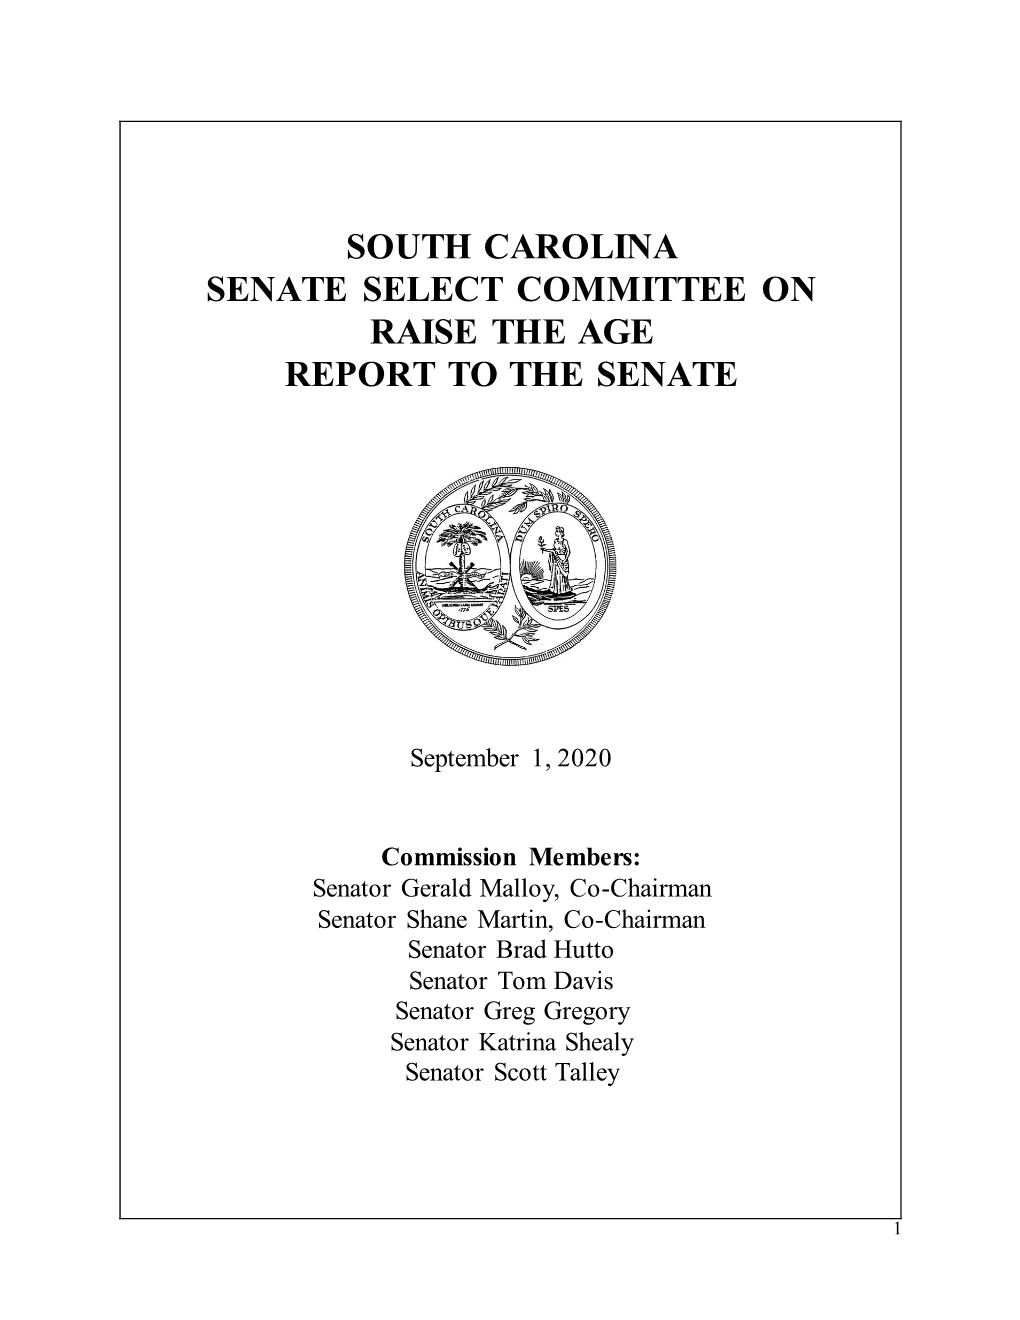 S.C. Senate Select Committee on Raise